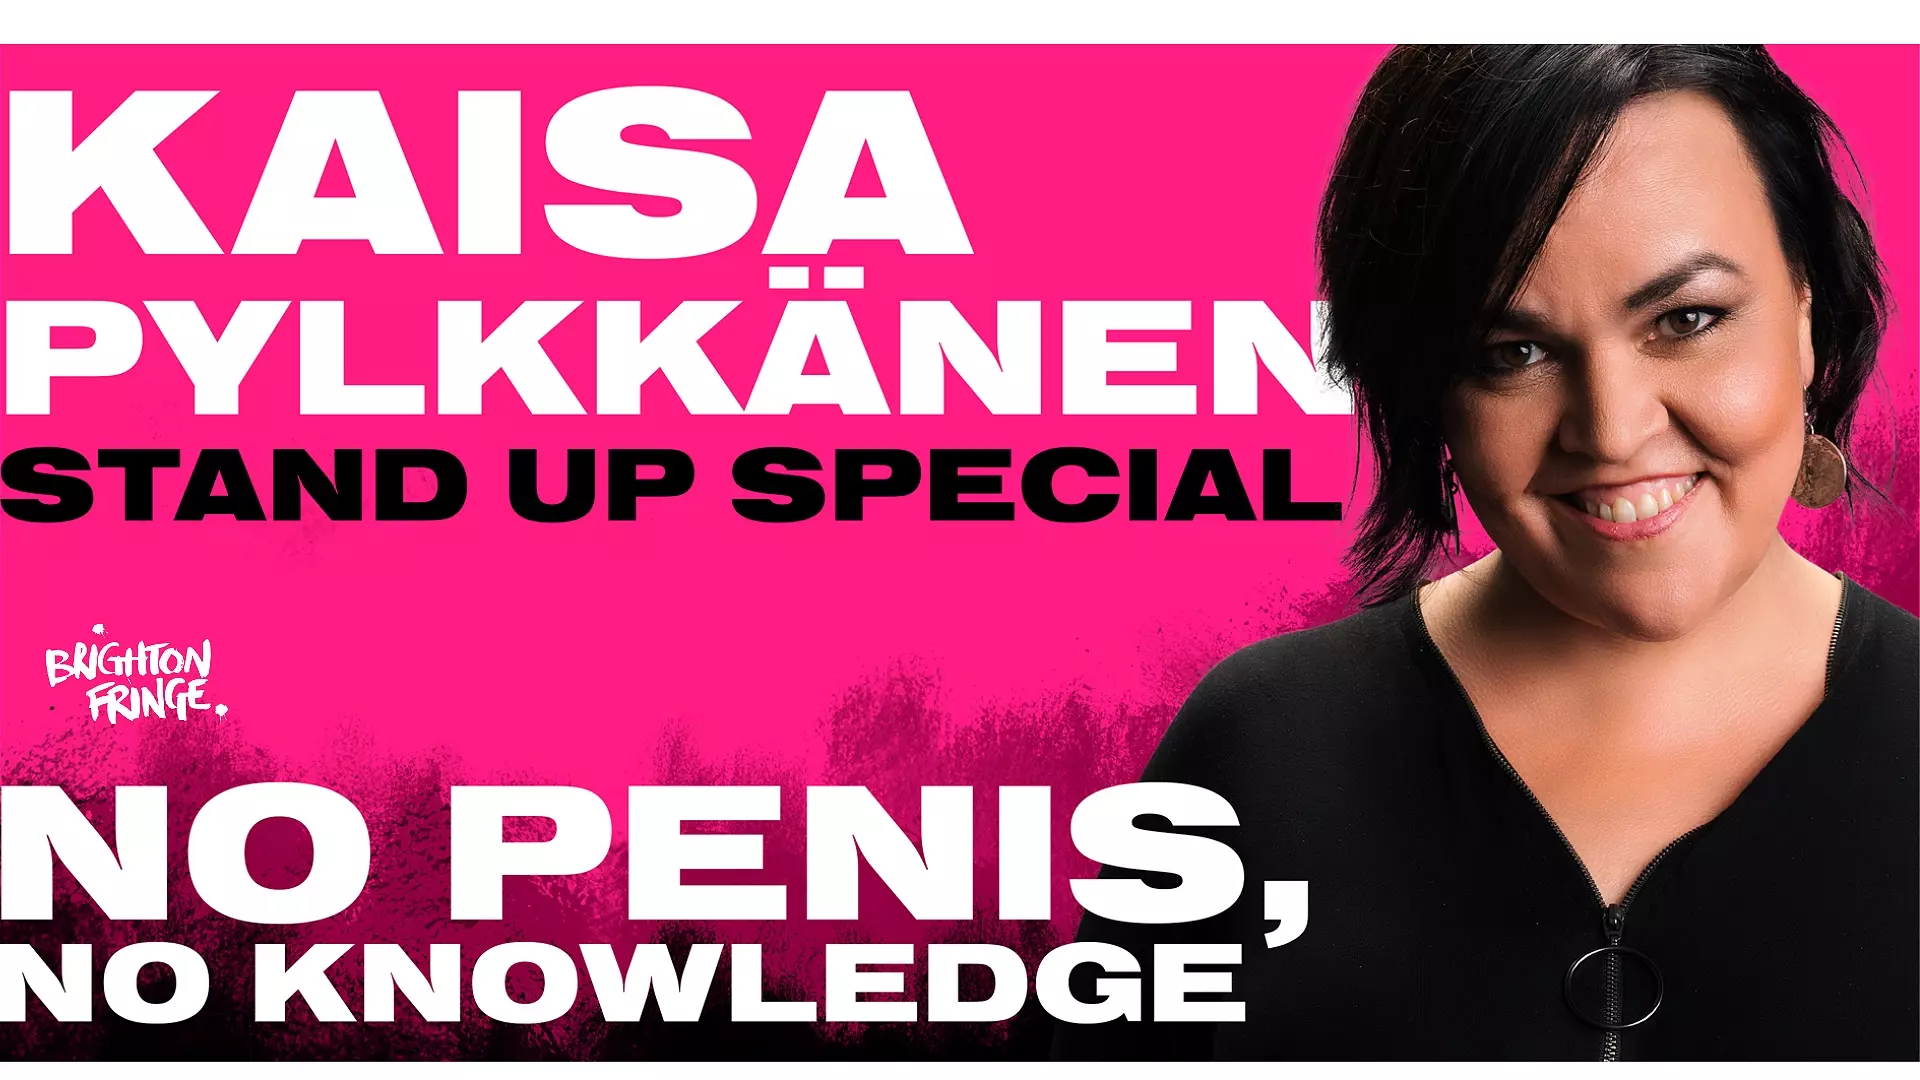 No Penis, No Knowledge: Kaisa Pylkkänen Stand Up Special - Brighton Fringe